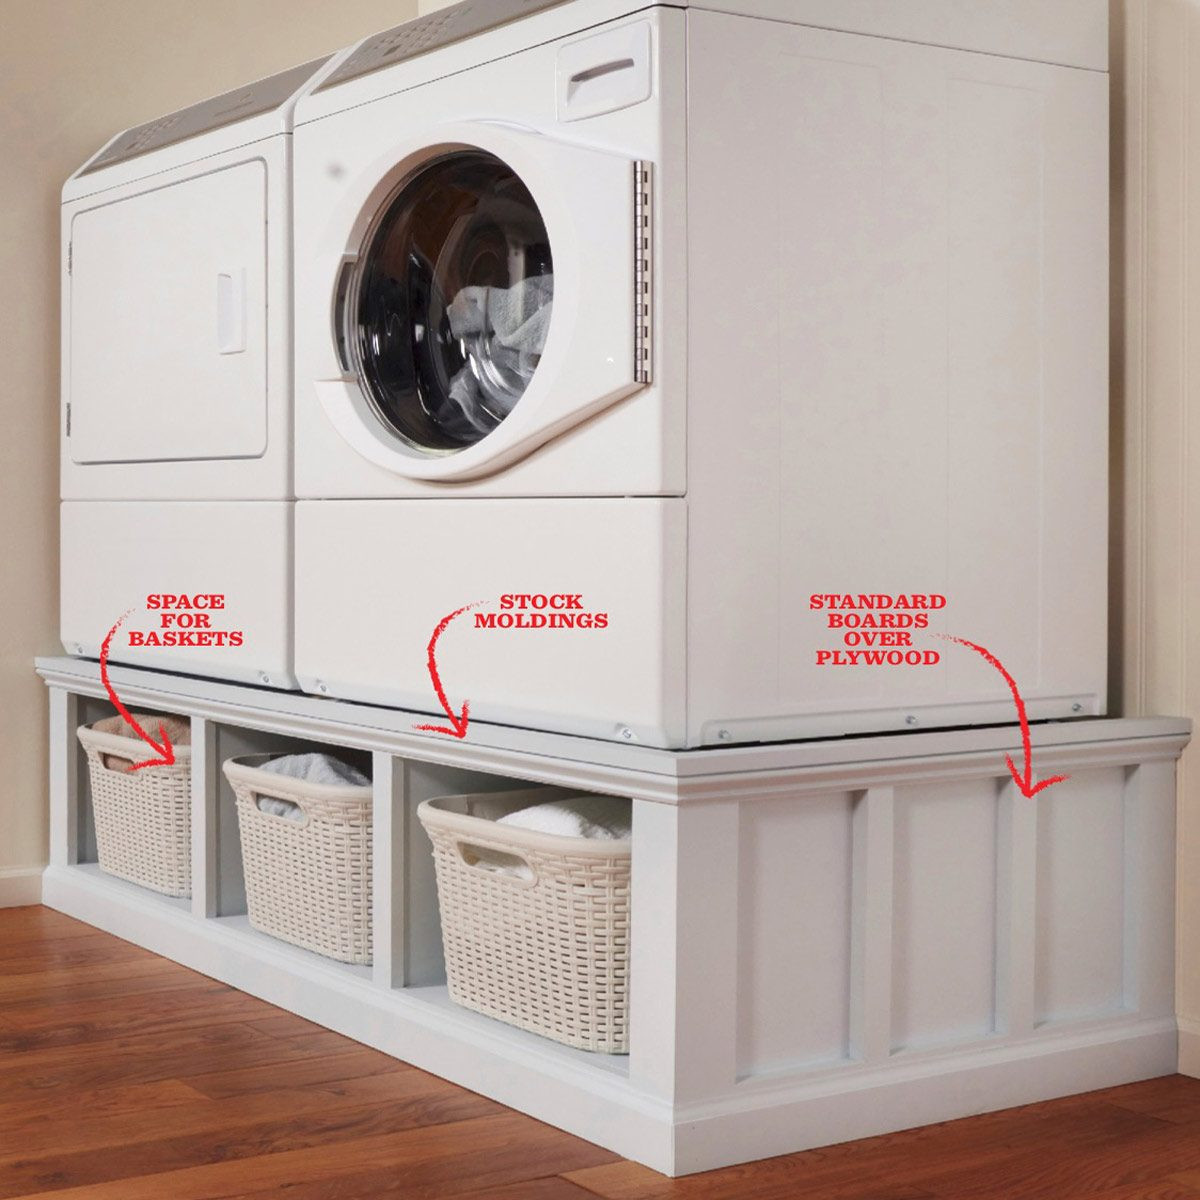 DIY Washer Dryer Pedestal Plans
 How to Build a Laundry Room Pedestal